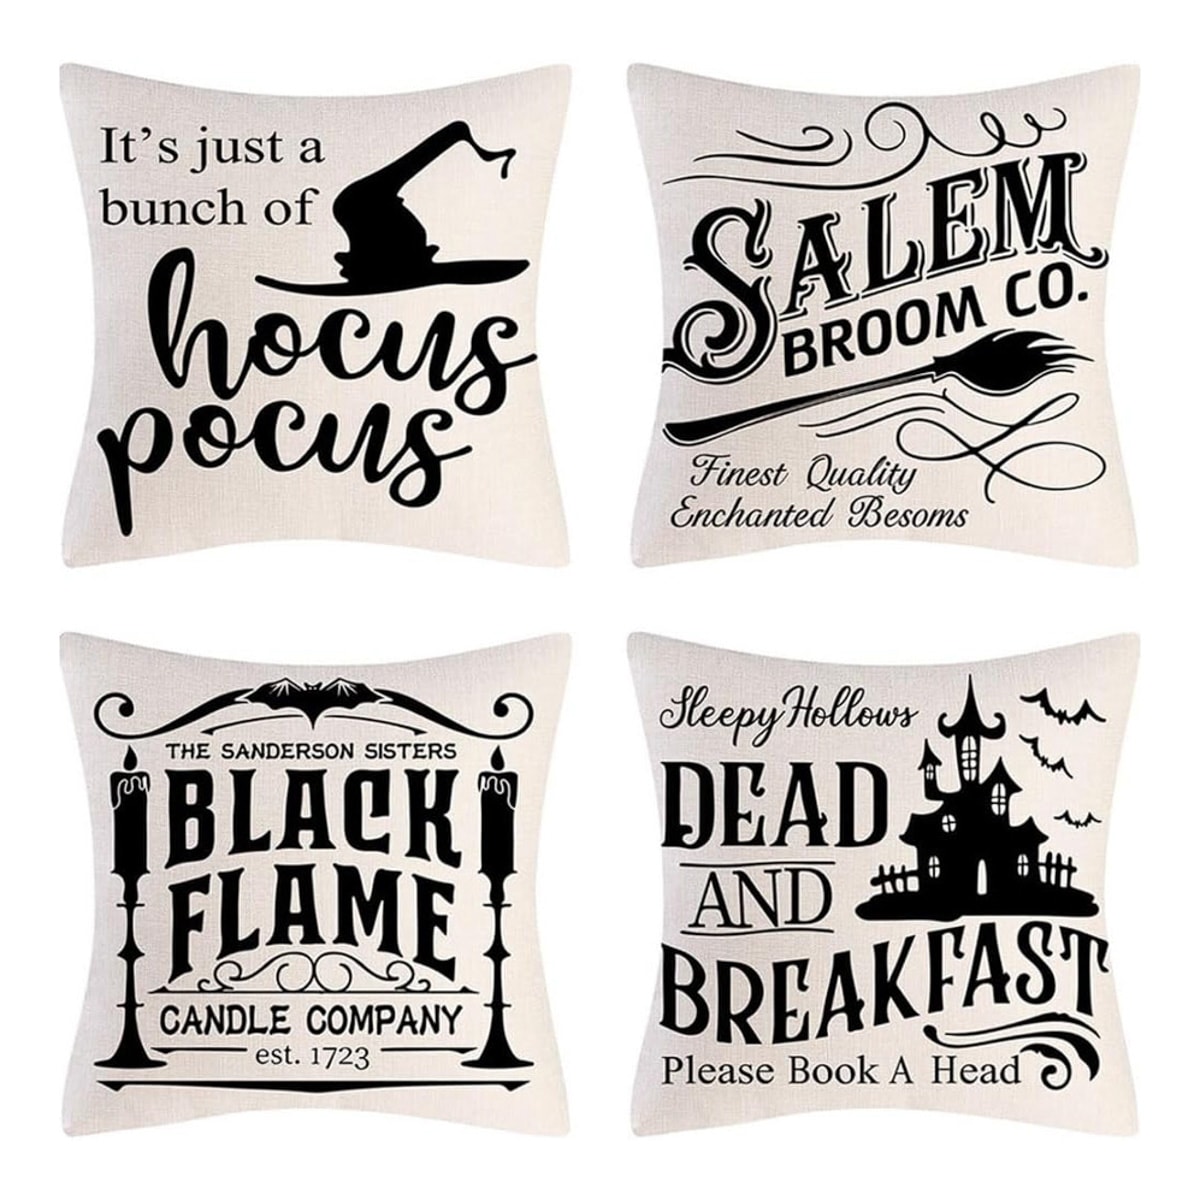 4 various Halloween pillow covers.